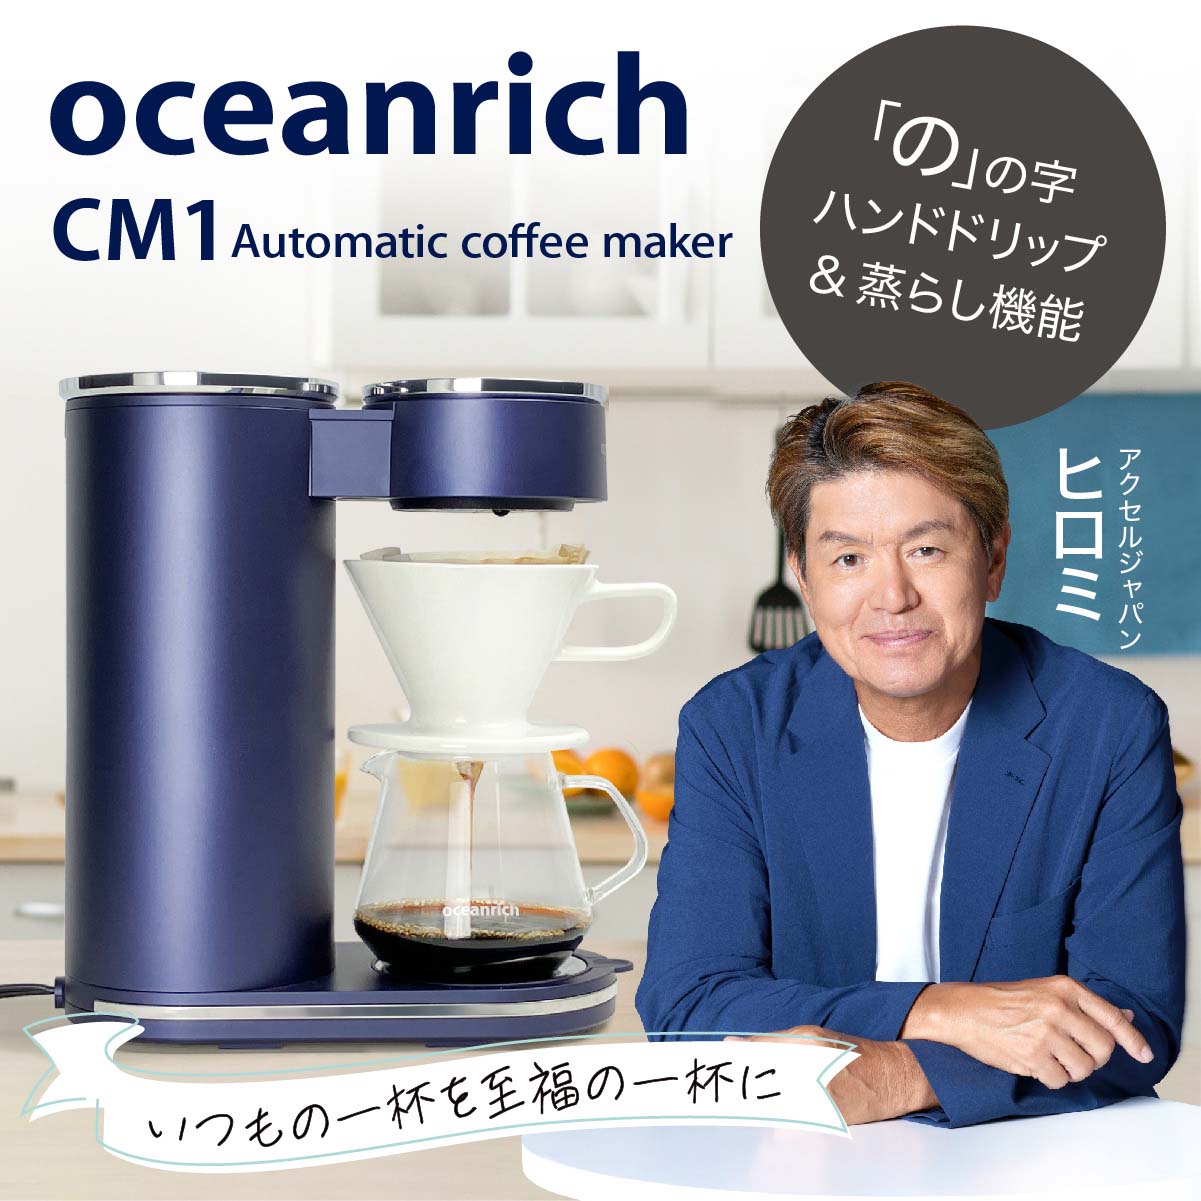 oceanrich_CM1